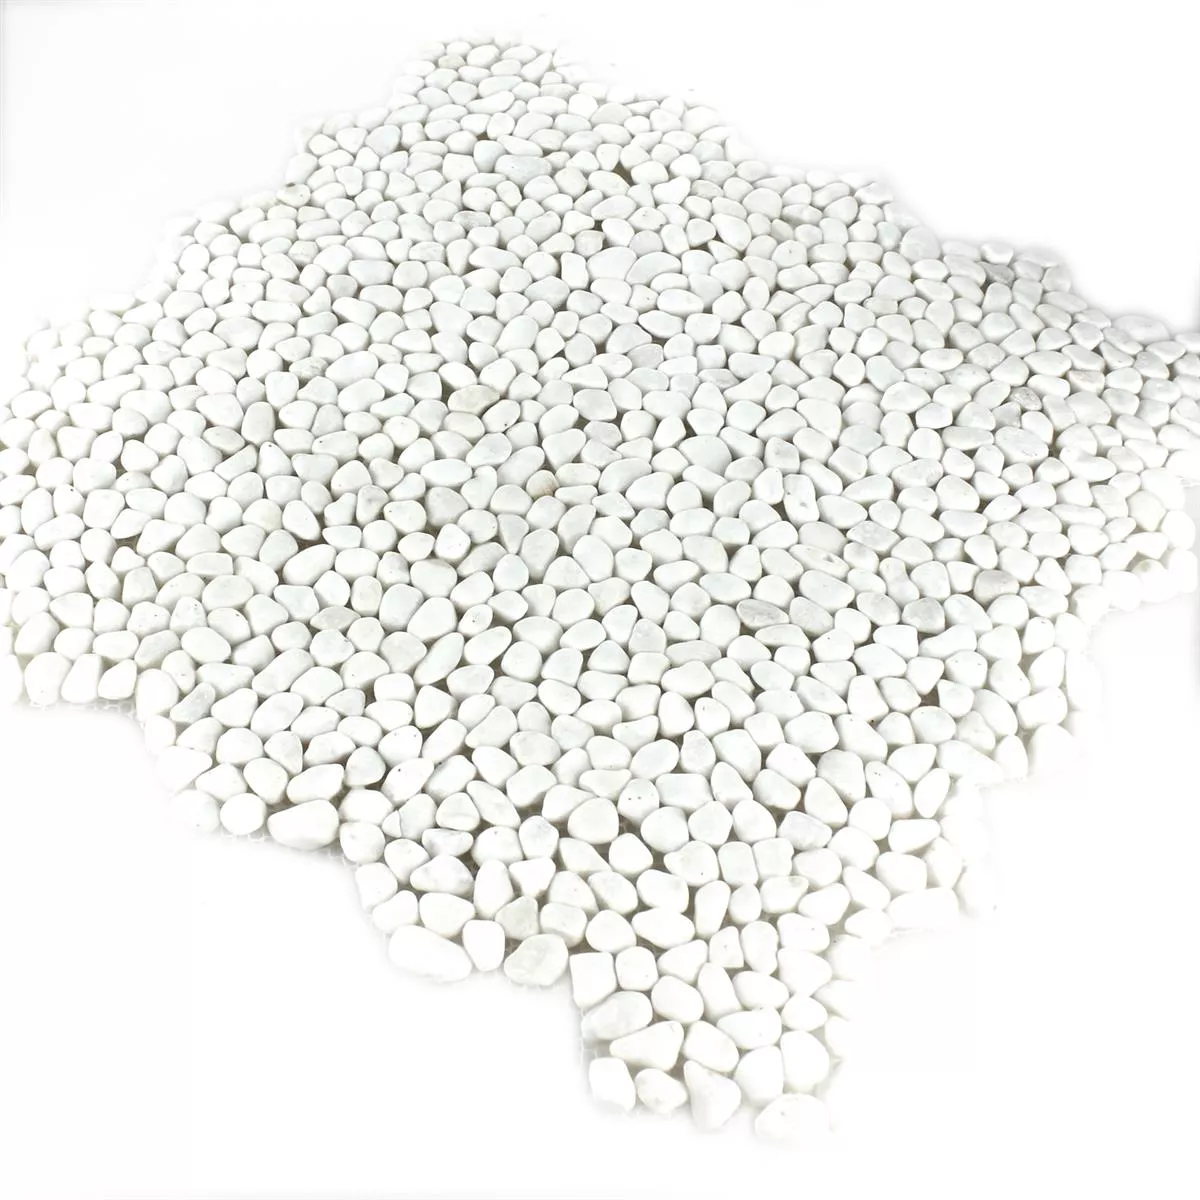 Sample River Pebbles Micro Mosaic White